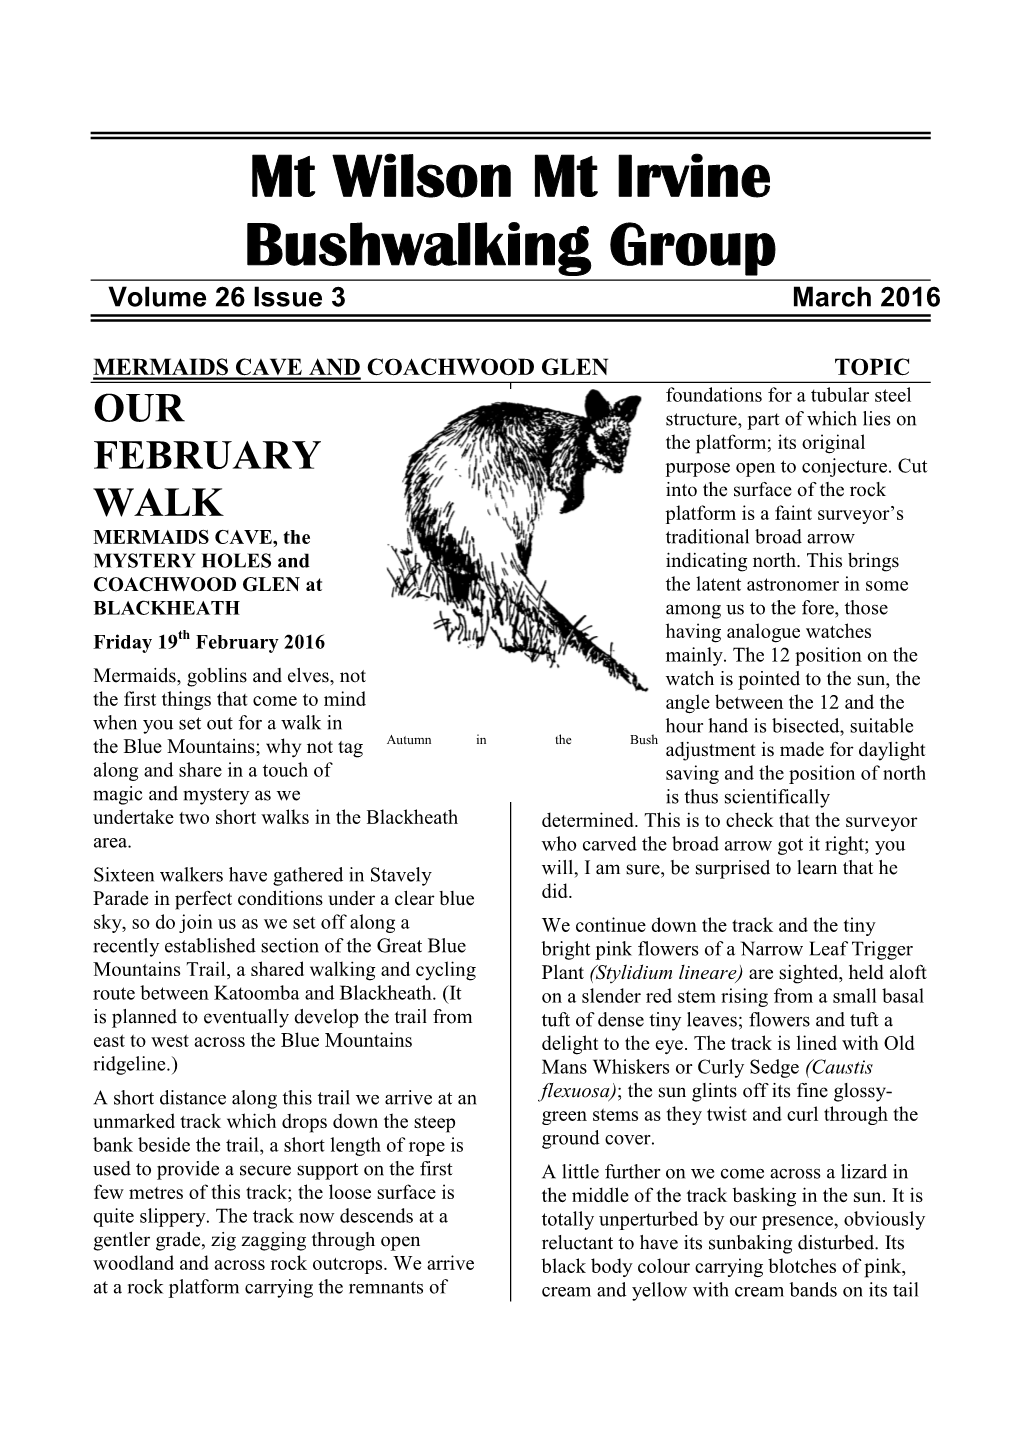 Mt Wilson Mt Irvine Bushwalking Group Volume 26 Issue 3 March 2016